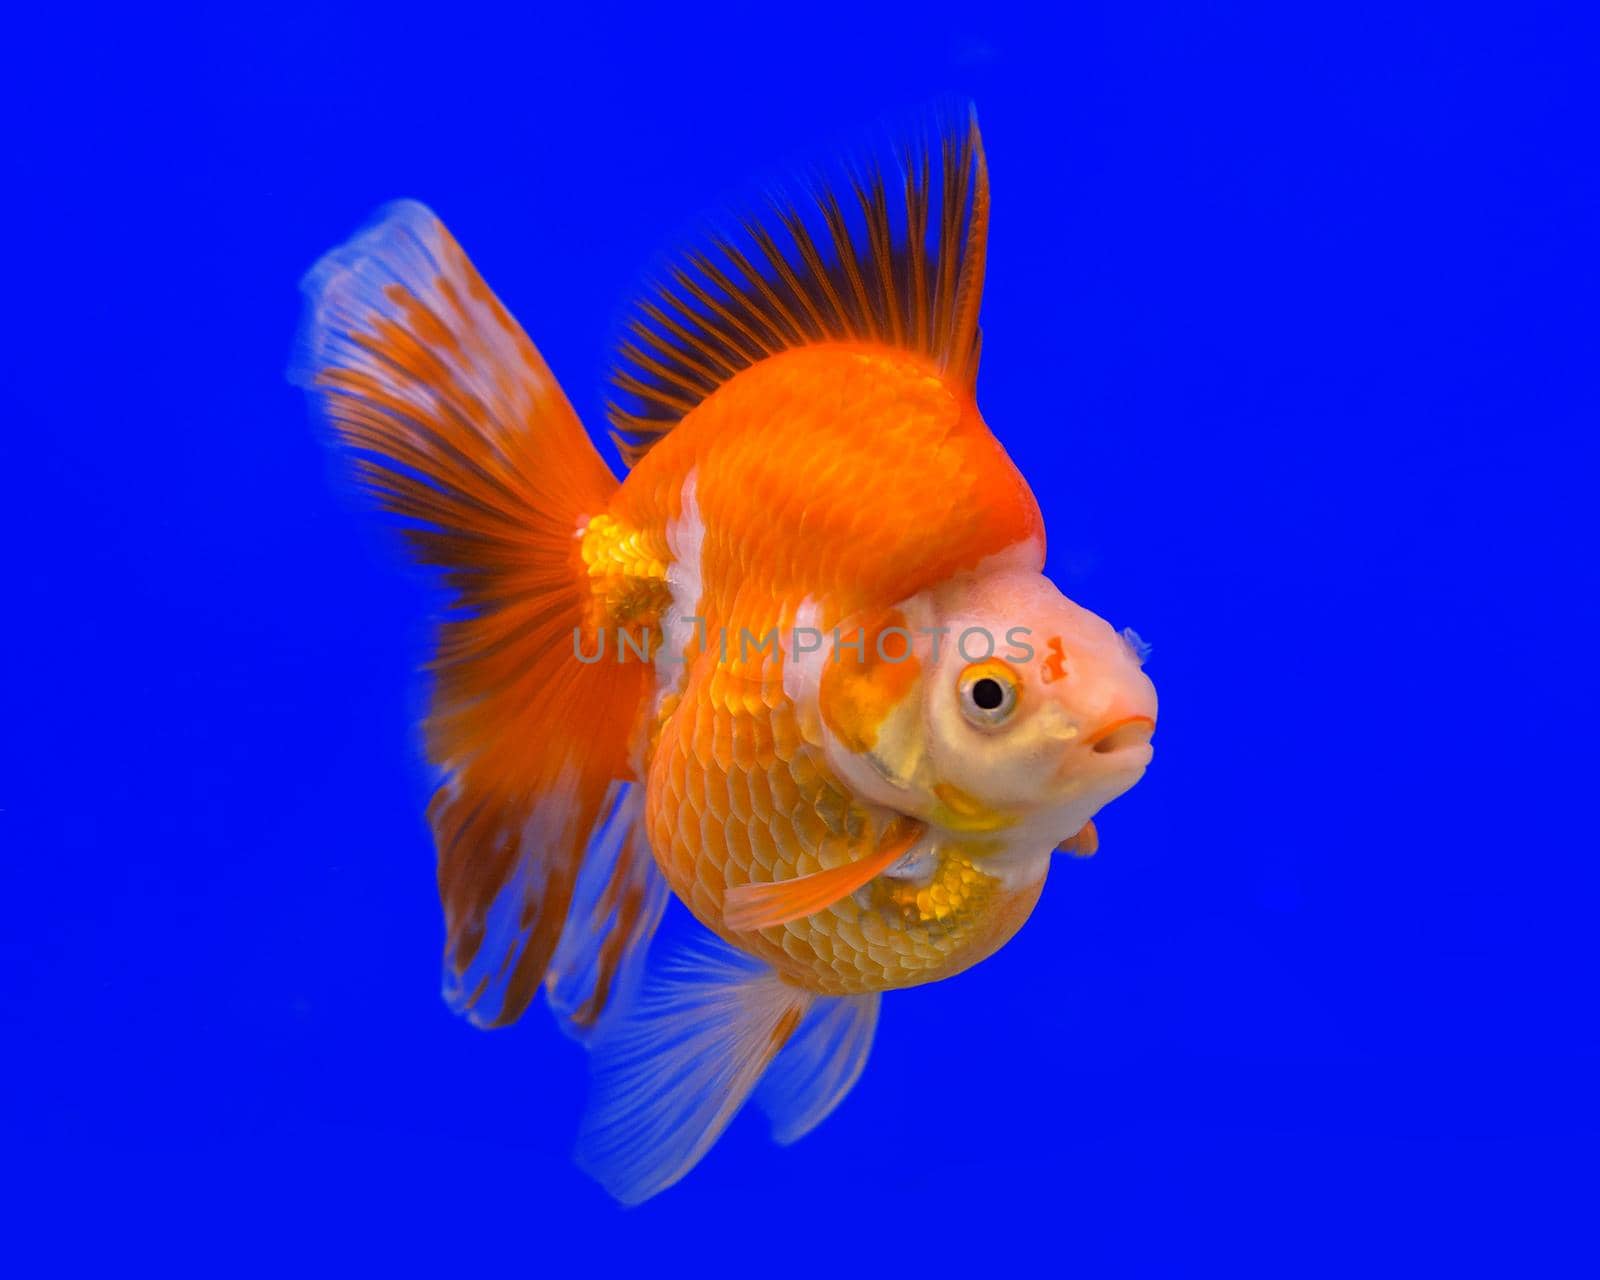 Ryukin goldfish in a blue background